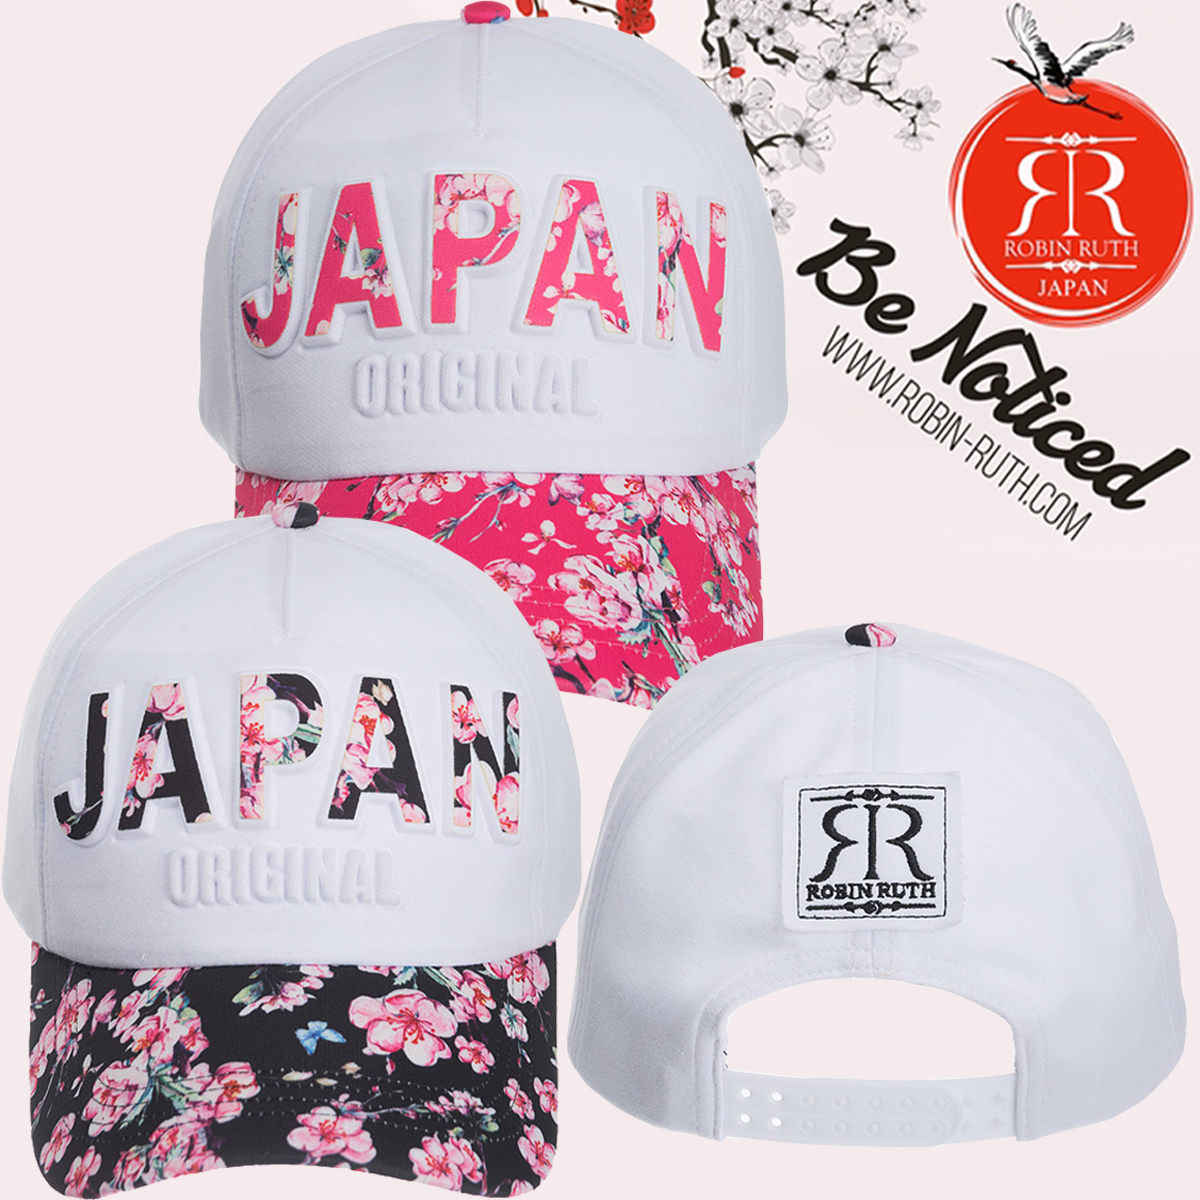 【Robin Ruth】ロビン・ルス JAPAN CAP(サクラロゴ) 帽子 キャップ